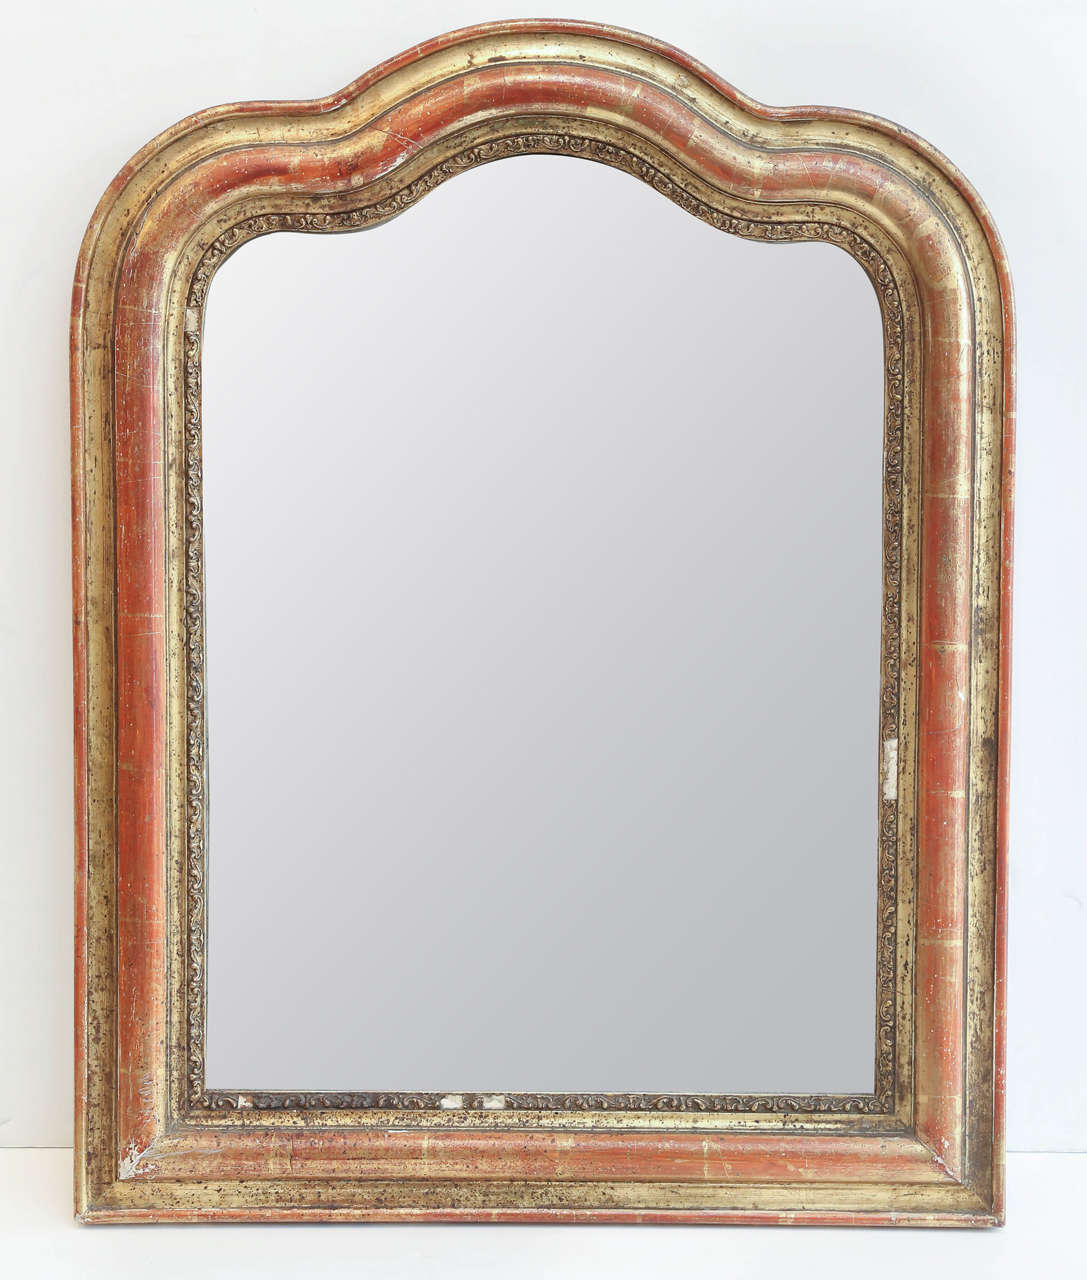 Late 19th Century bois doré frame with original mirror.